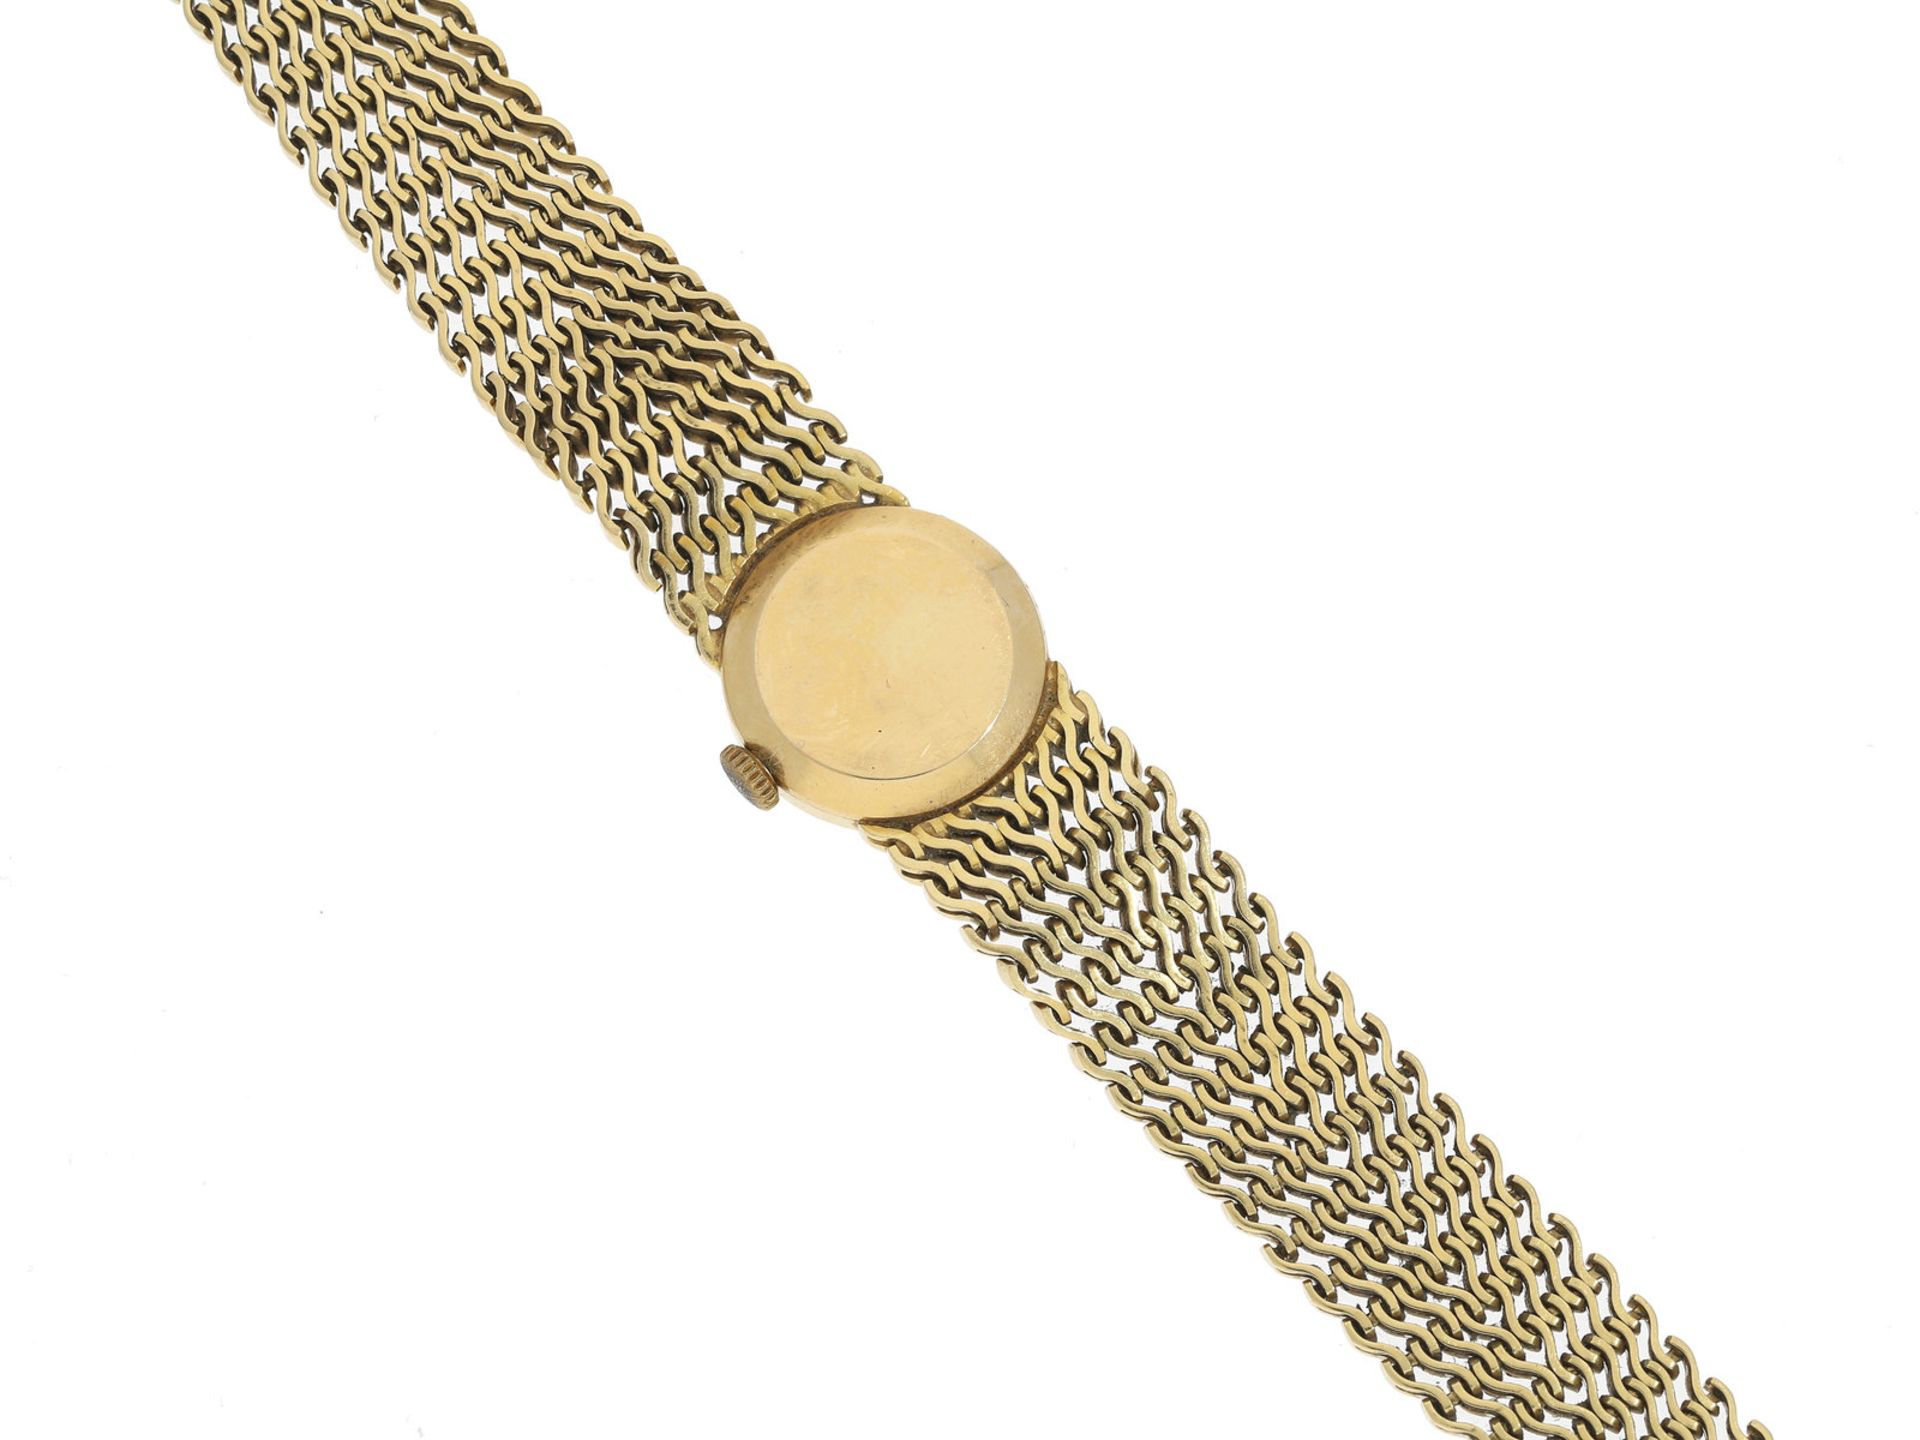 Armbanduhr: schwere, goldene Damenuhr der Marke "Sarcar", 18K GoldCa. Ø19mm, ca. 18cm lang, ca. 46g, - Bild 2 aus 2